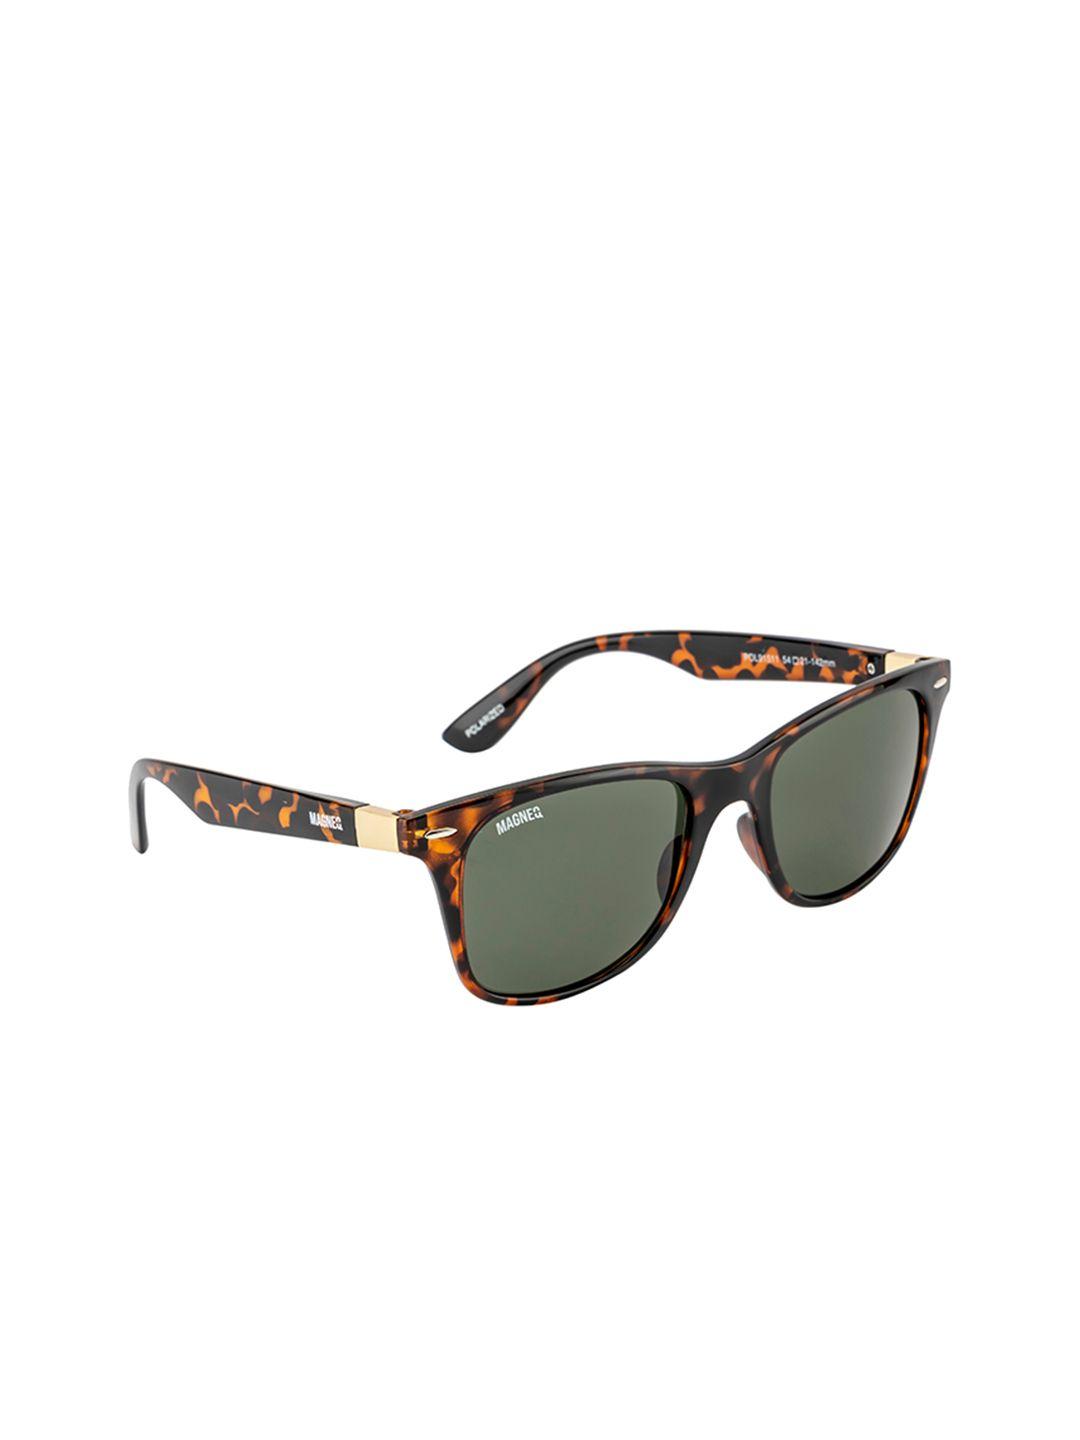 magneq lens & wayfarer sunglasses with polarised & uv protected lens mg 91511/s c4 5421